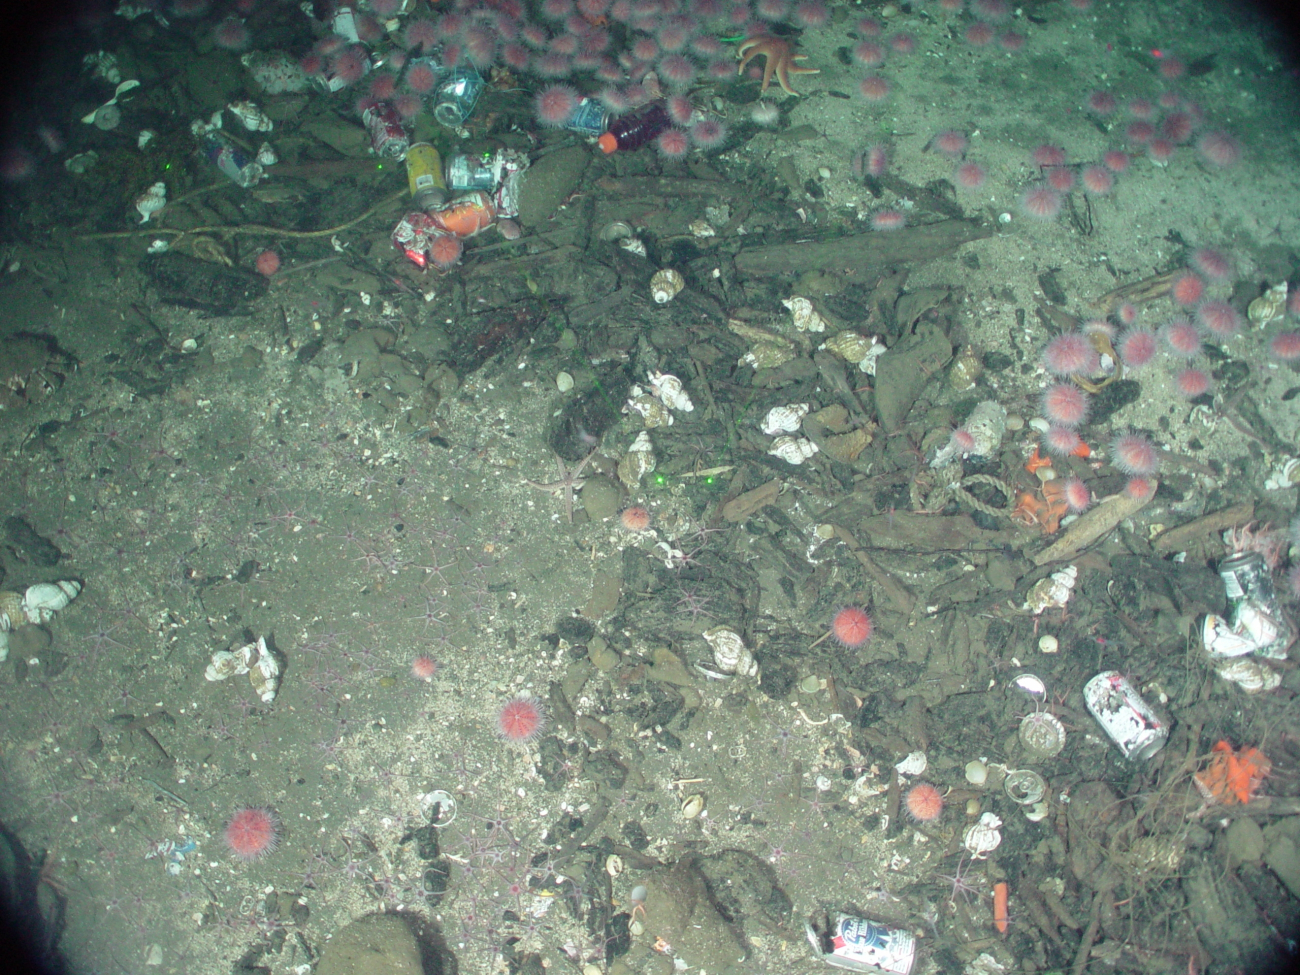 Marine debris human trash thrown overboard attracts urchins, a sun star, andwhelks